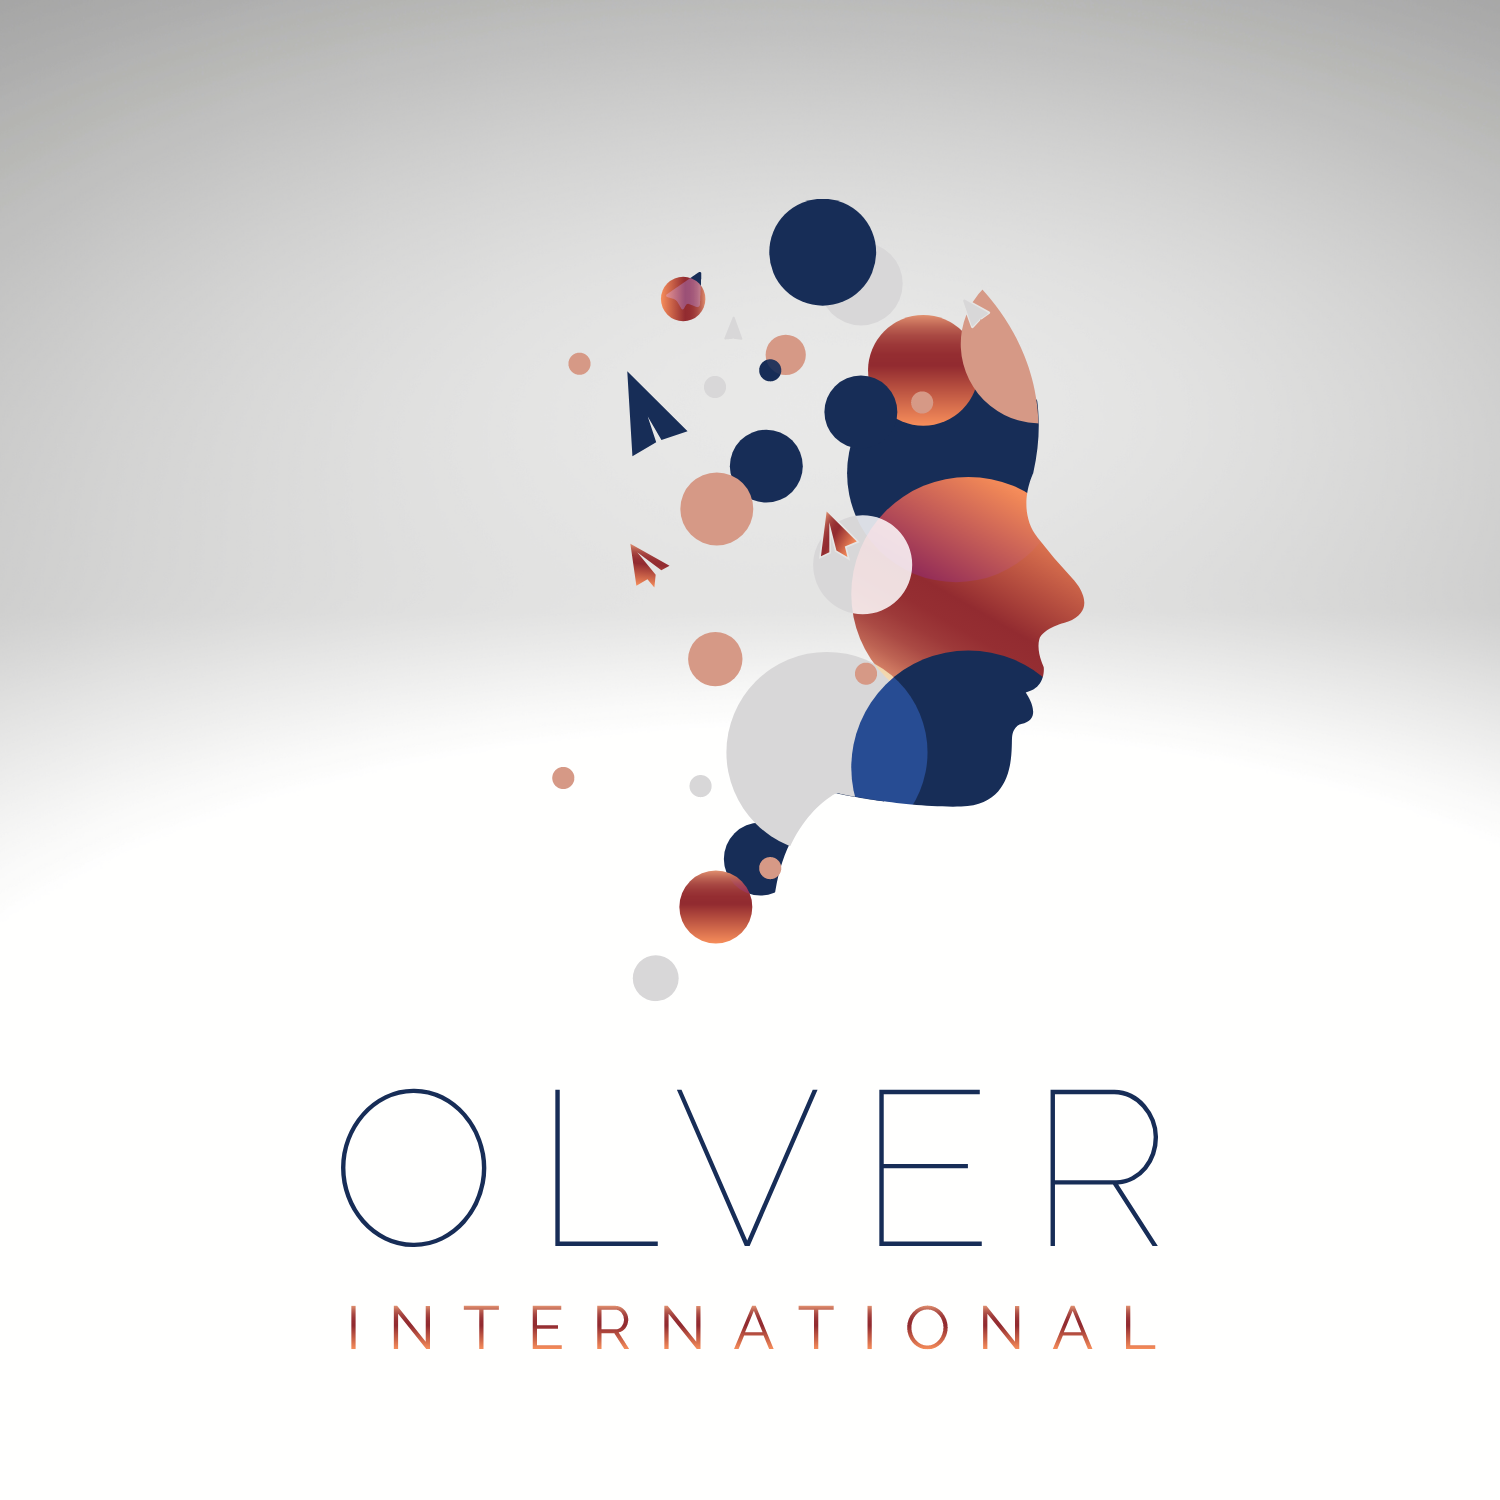 Olver International #4 (Large)